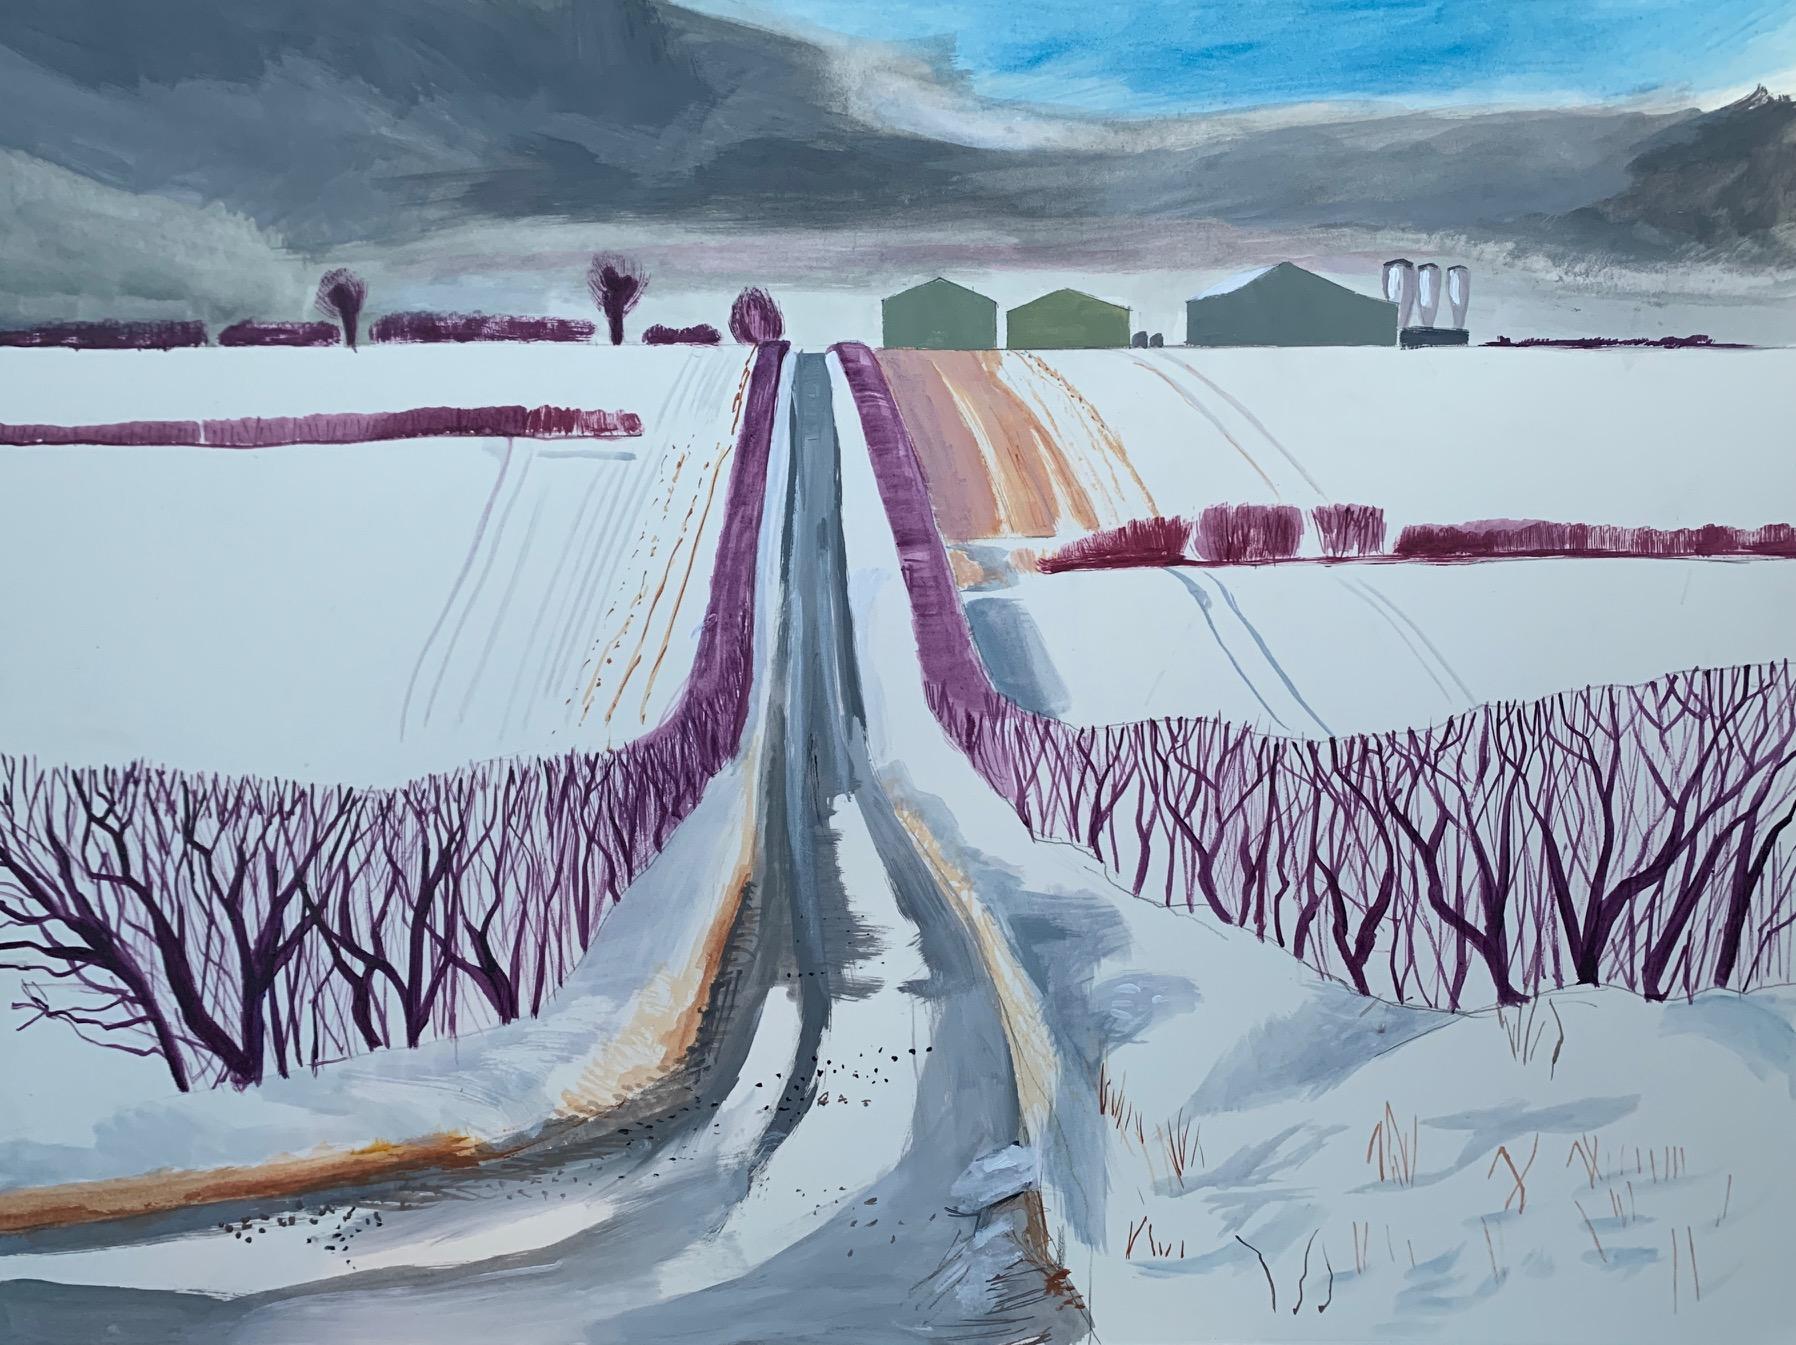 Cornelia Fitzroy  Landscape Painting - Snow Fields and Barn, Landscape drawing, Pastel drawing, original art